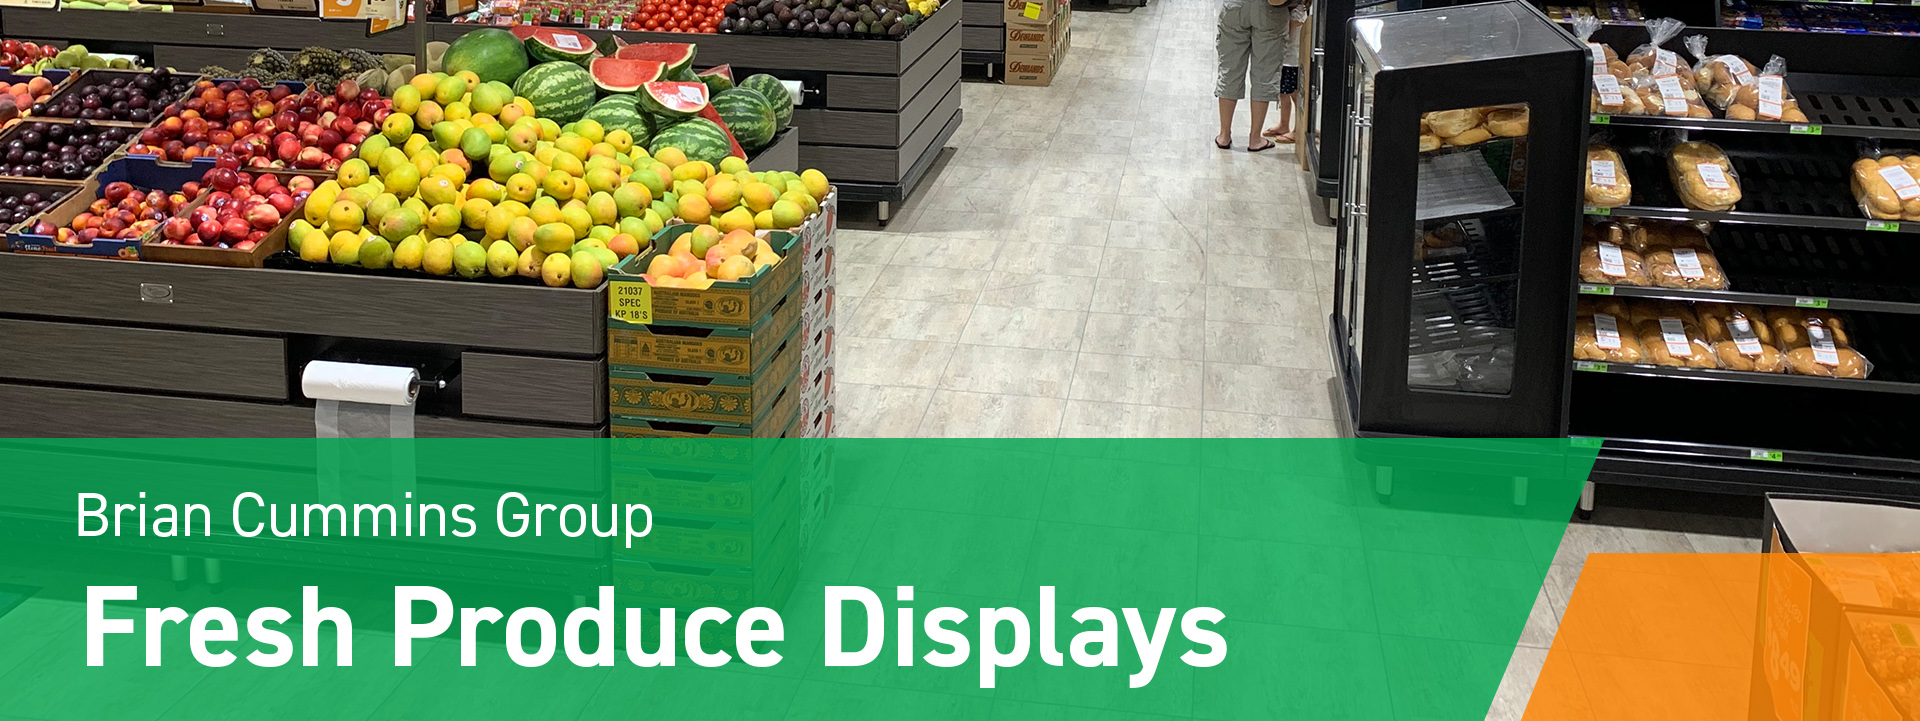 Fresh Produce Displays and Storage - Brian Cummins Group